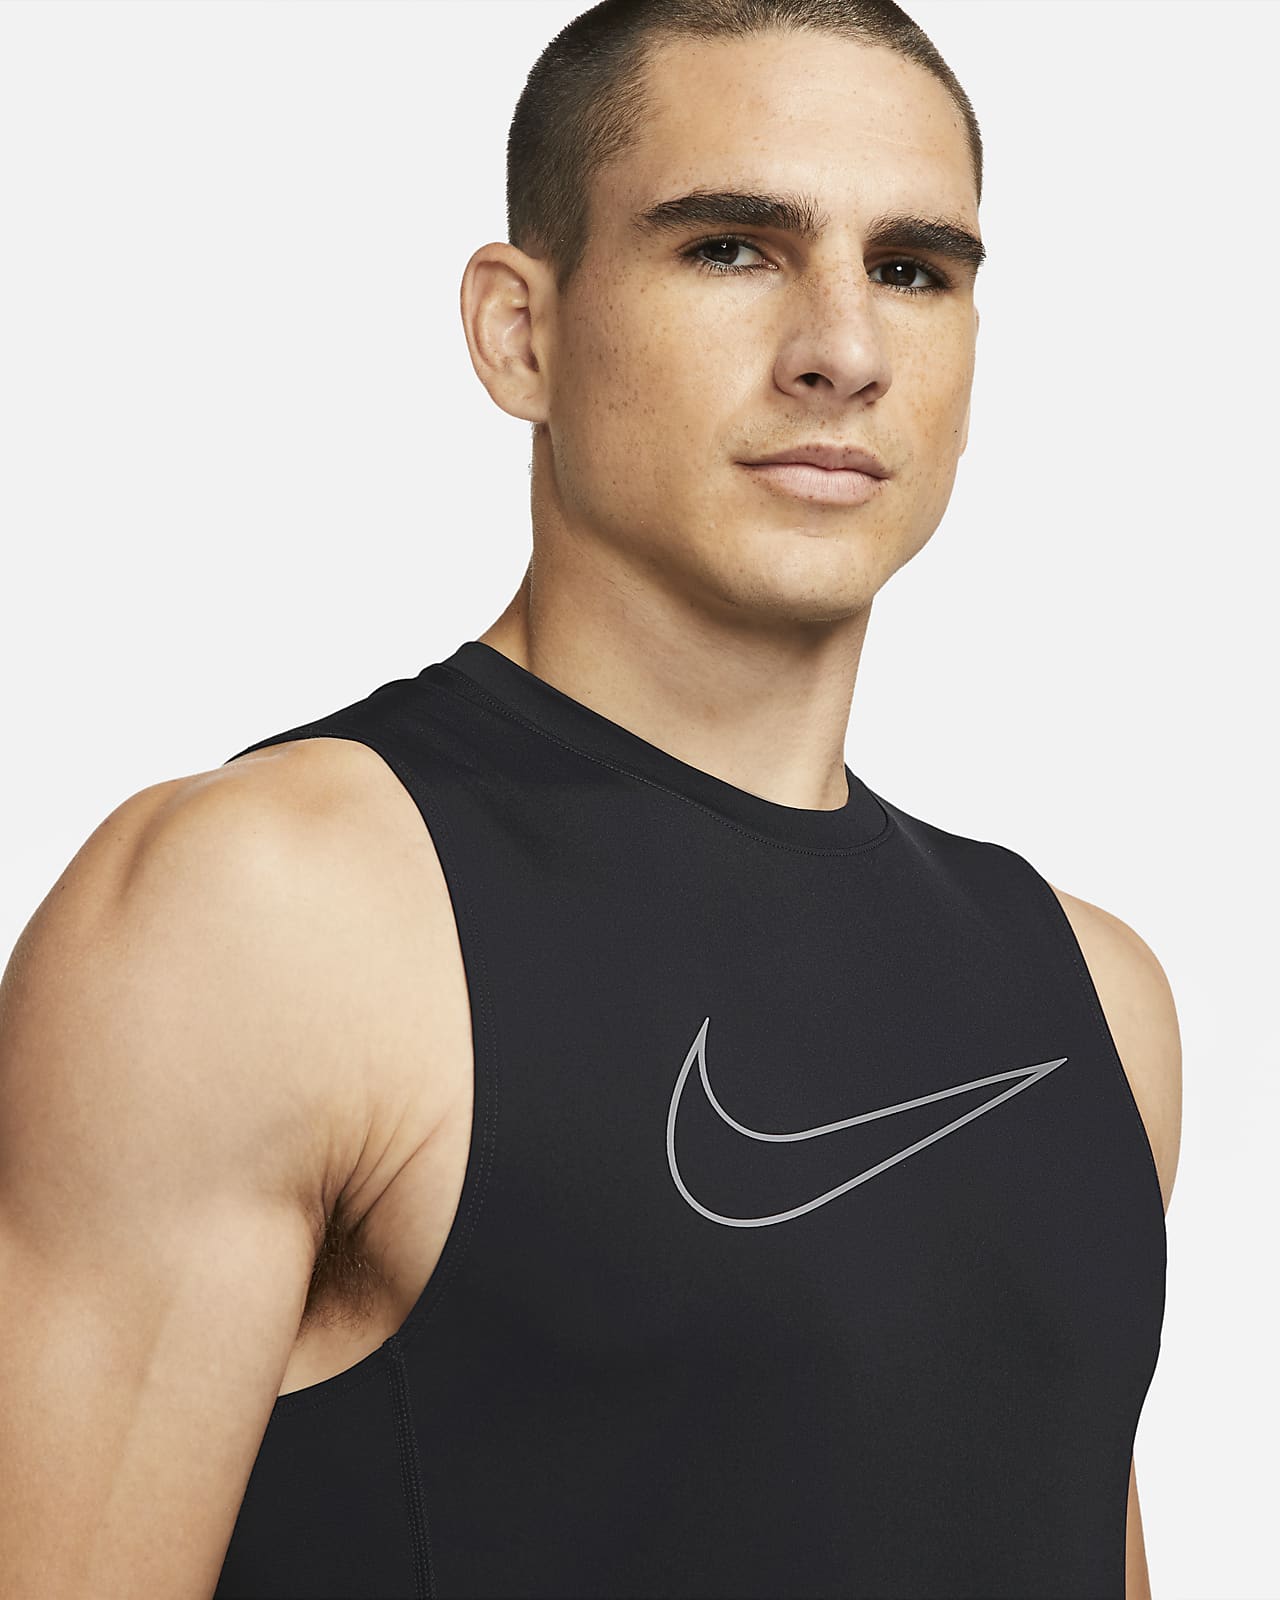 Camiseta sinmangas y slim para Nike Pro Nike.com